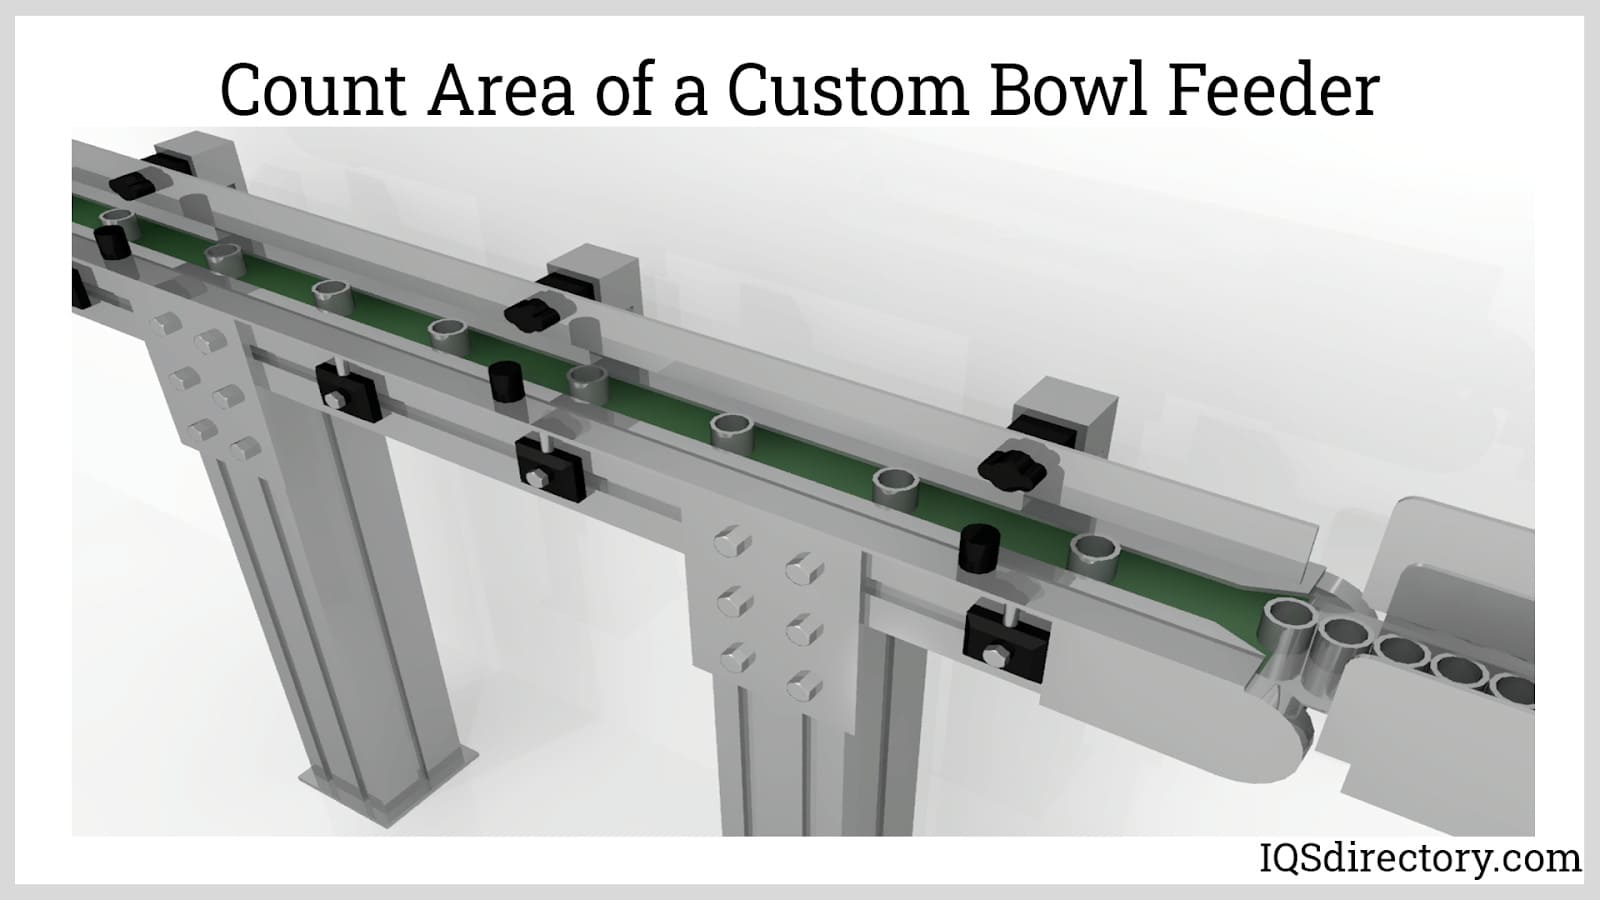 Count Area of a Custom Bowl Feeder